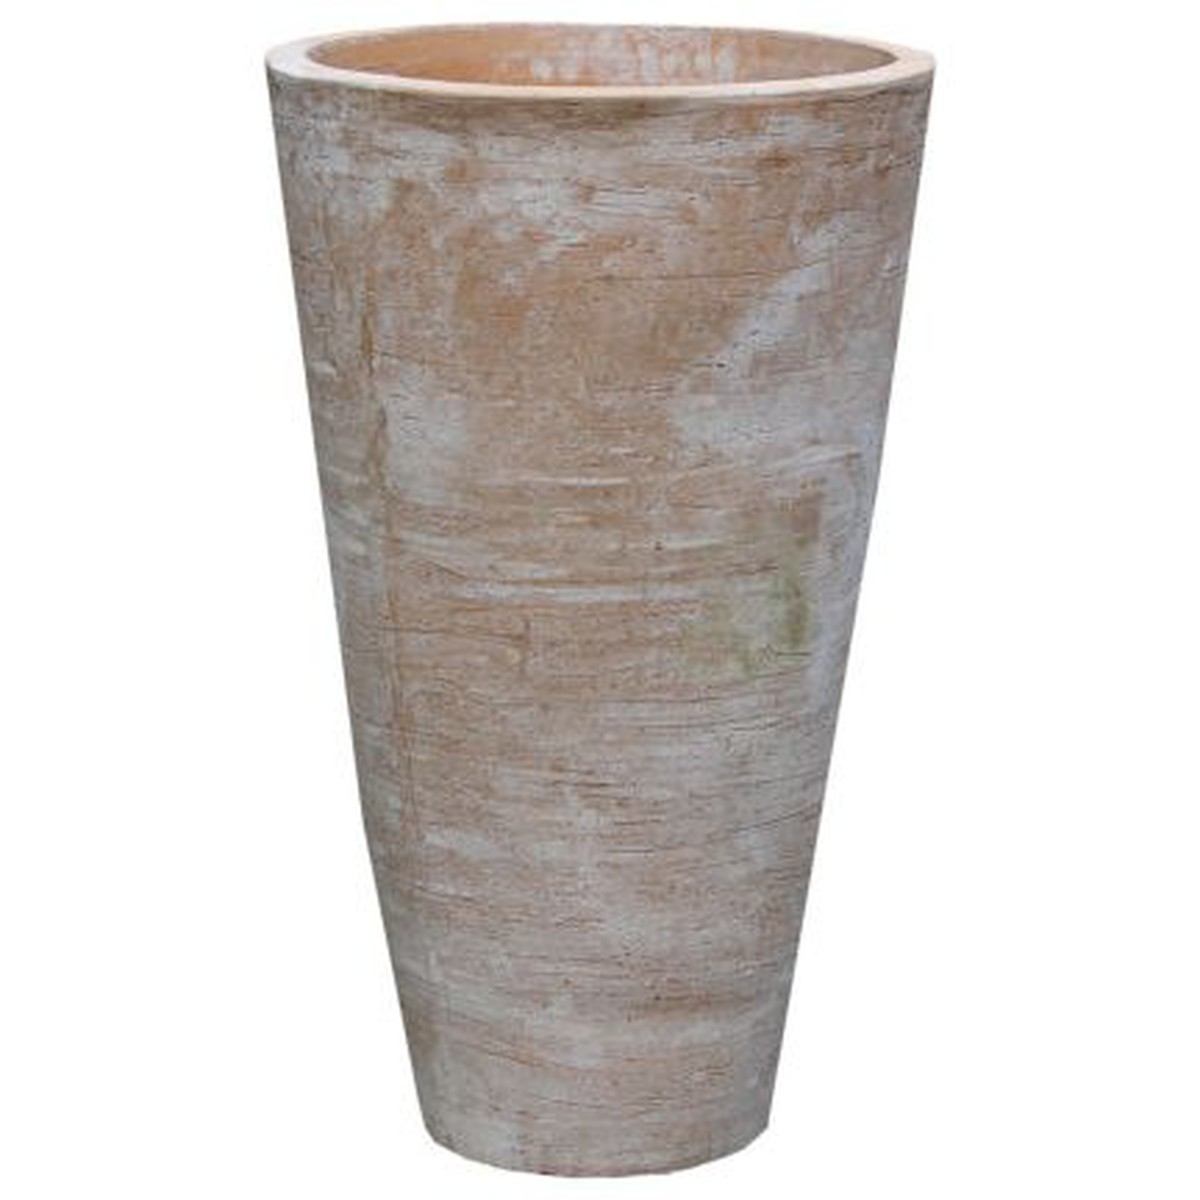   Vase Rond Crafted XL Brun terre de Sienne brulée 44x75cm